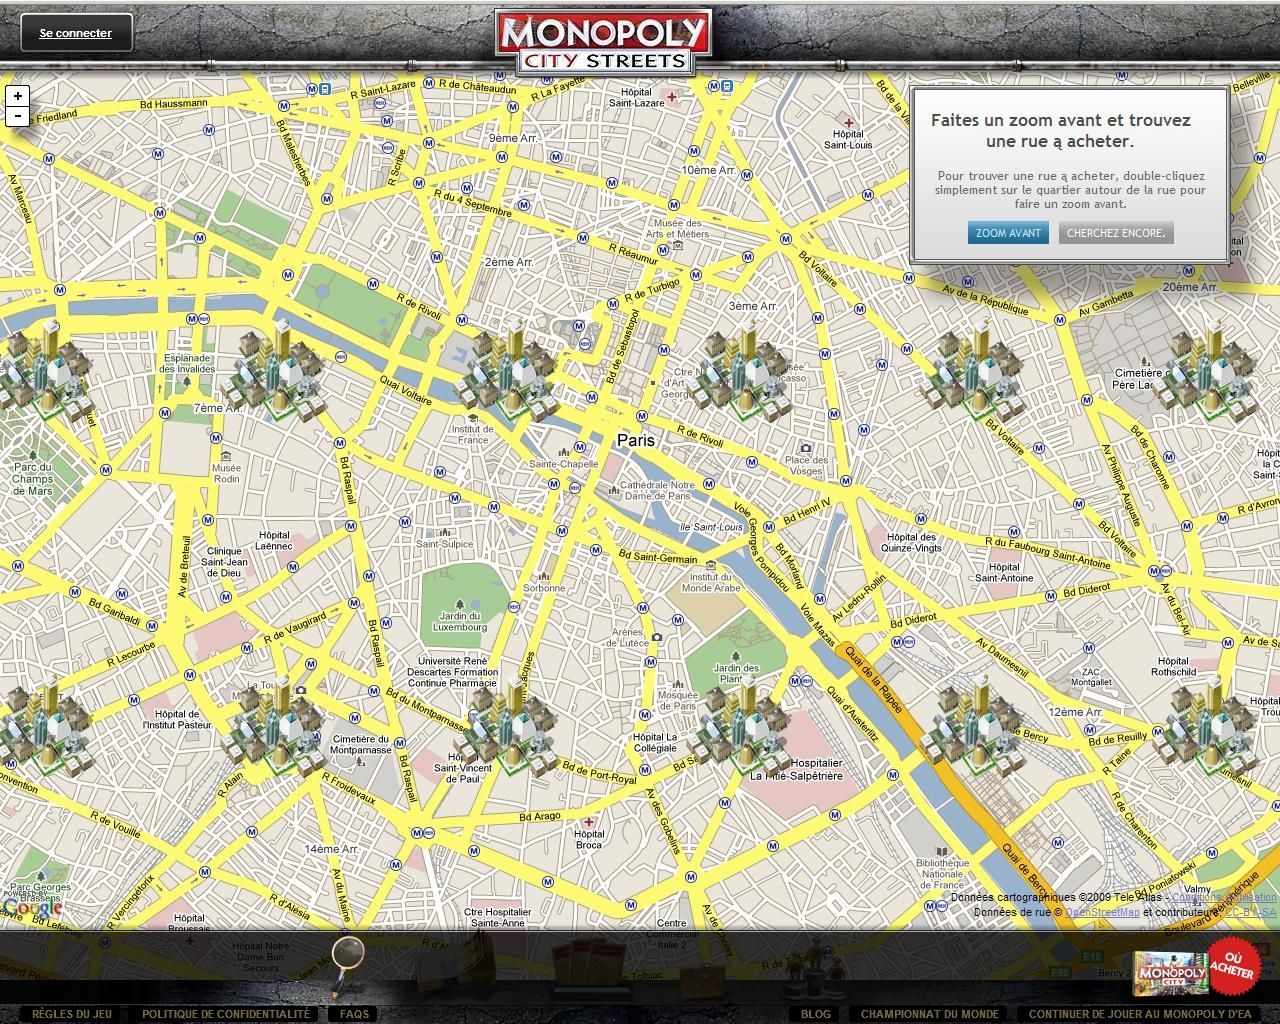 Monopoly City Streets (1)